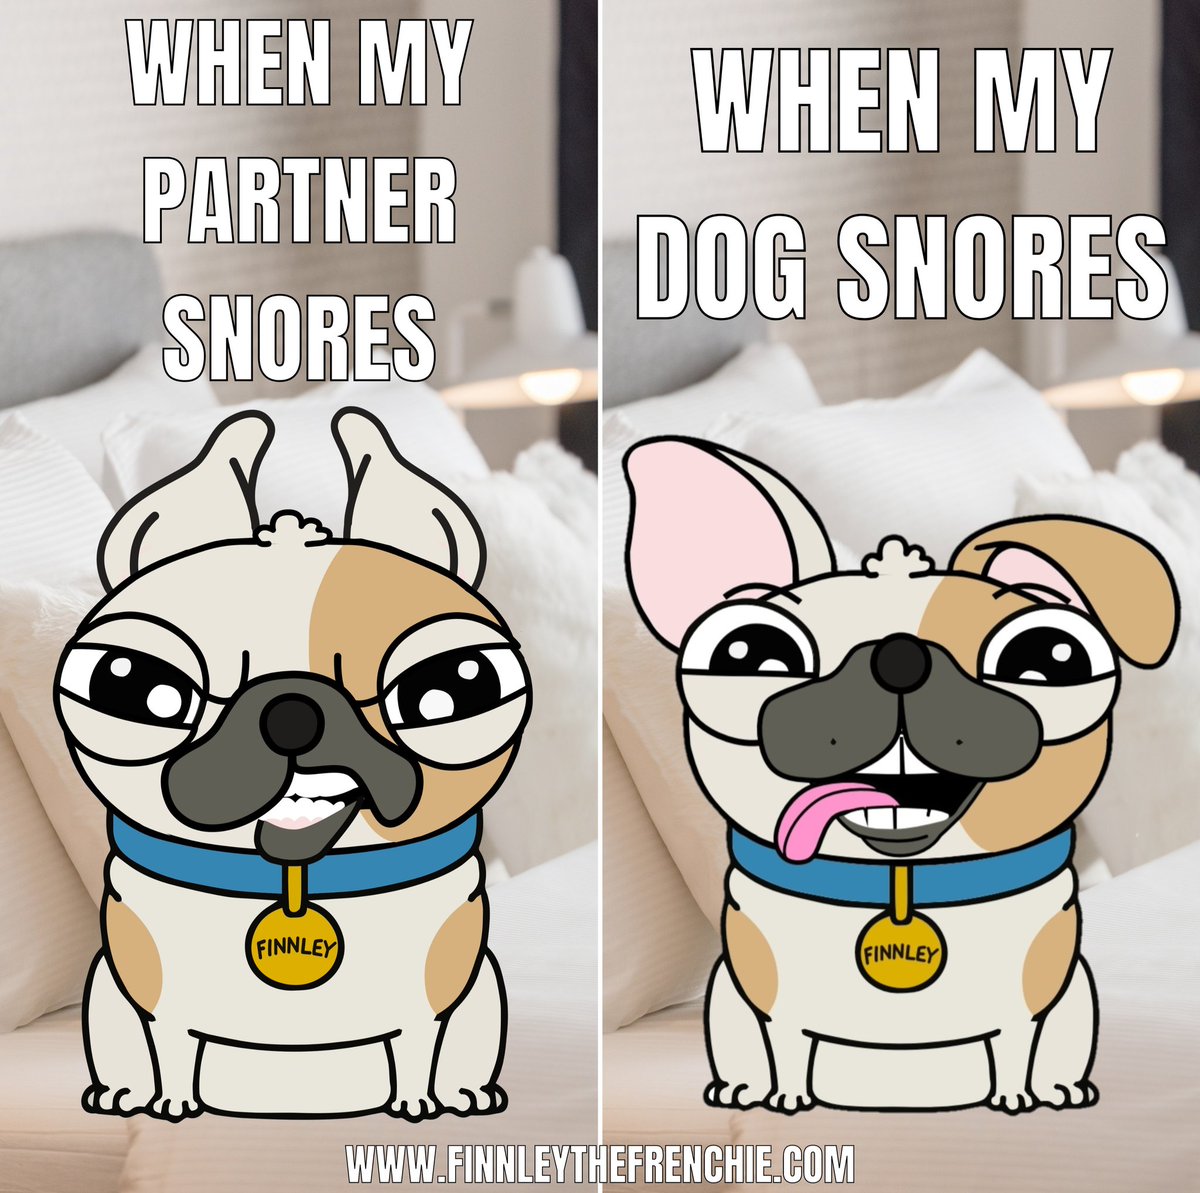 Sweet Dreams! 😴 🤪

finnleythefrenchie.com 

#dog #comedy #dogsoftwitter #dogsoffacebook #dogsofinsta #dogsofinstagram #pet #humor #cartoon #drawing #comics #memes #thursdaymorning #thursdayvibes #ThursdayMotivation #ThursdayThoughts